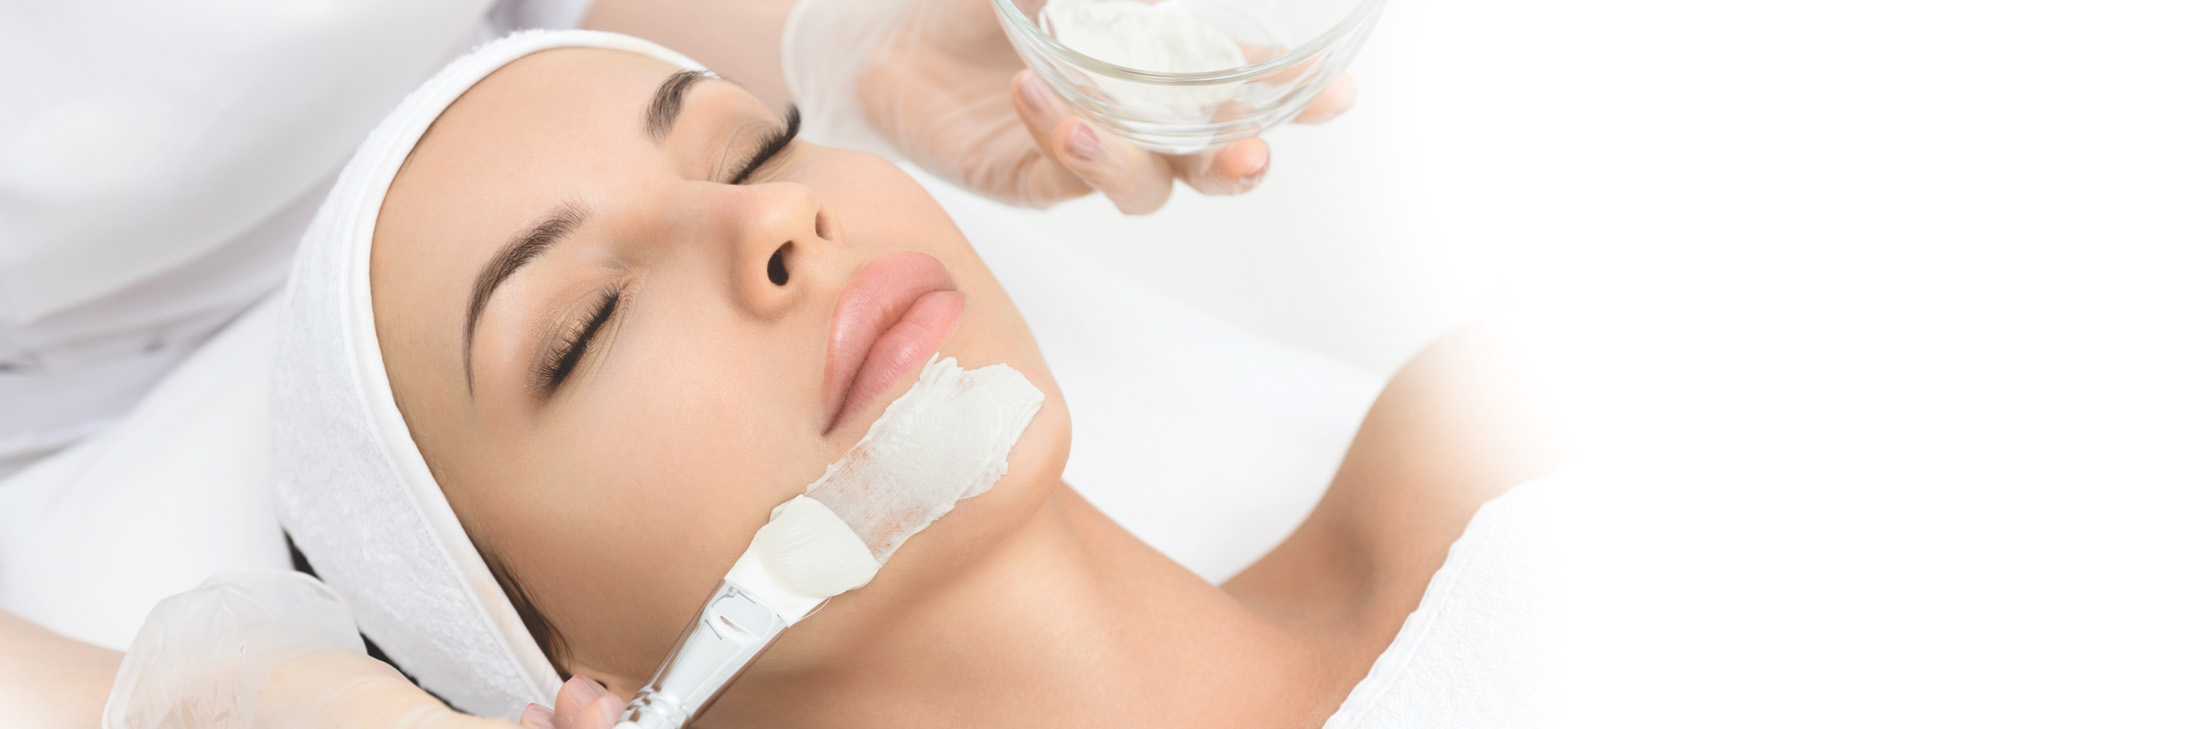 professional skin care treatments